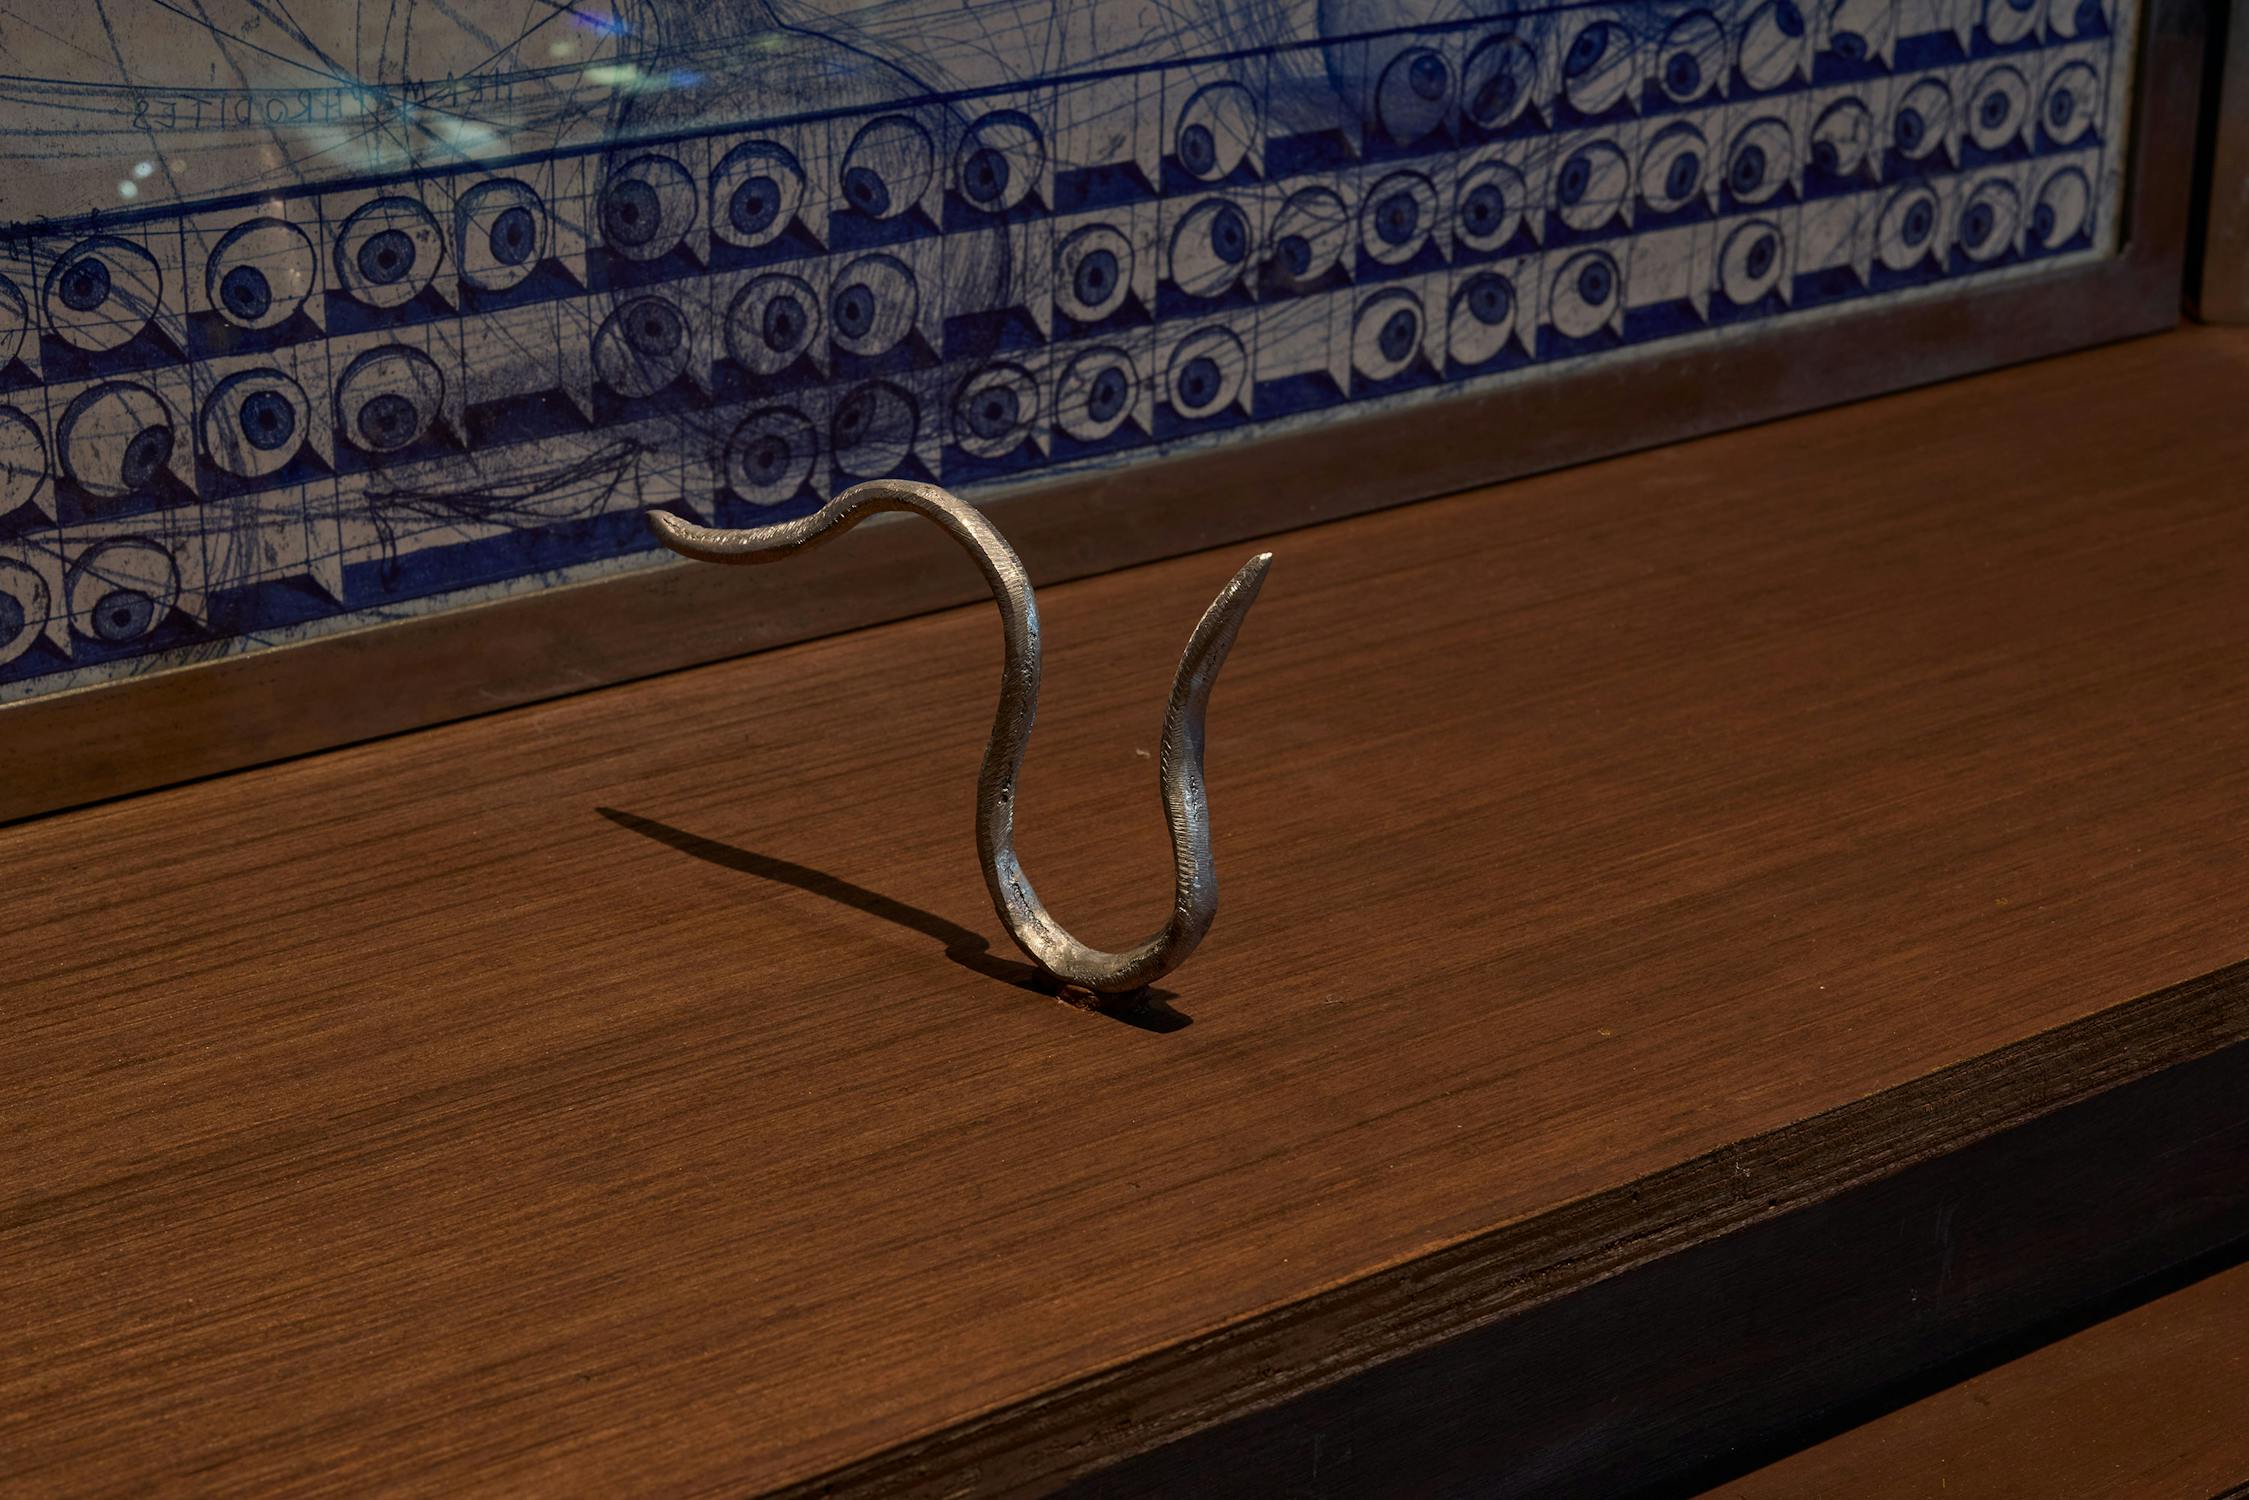 A sculpted silver worm on a wooden shelf